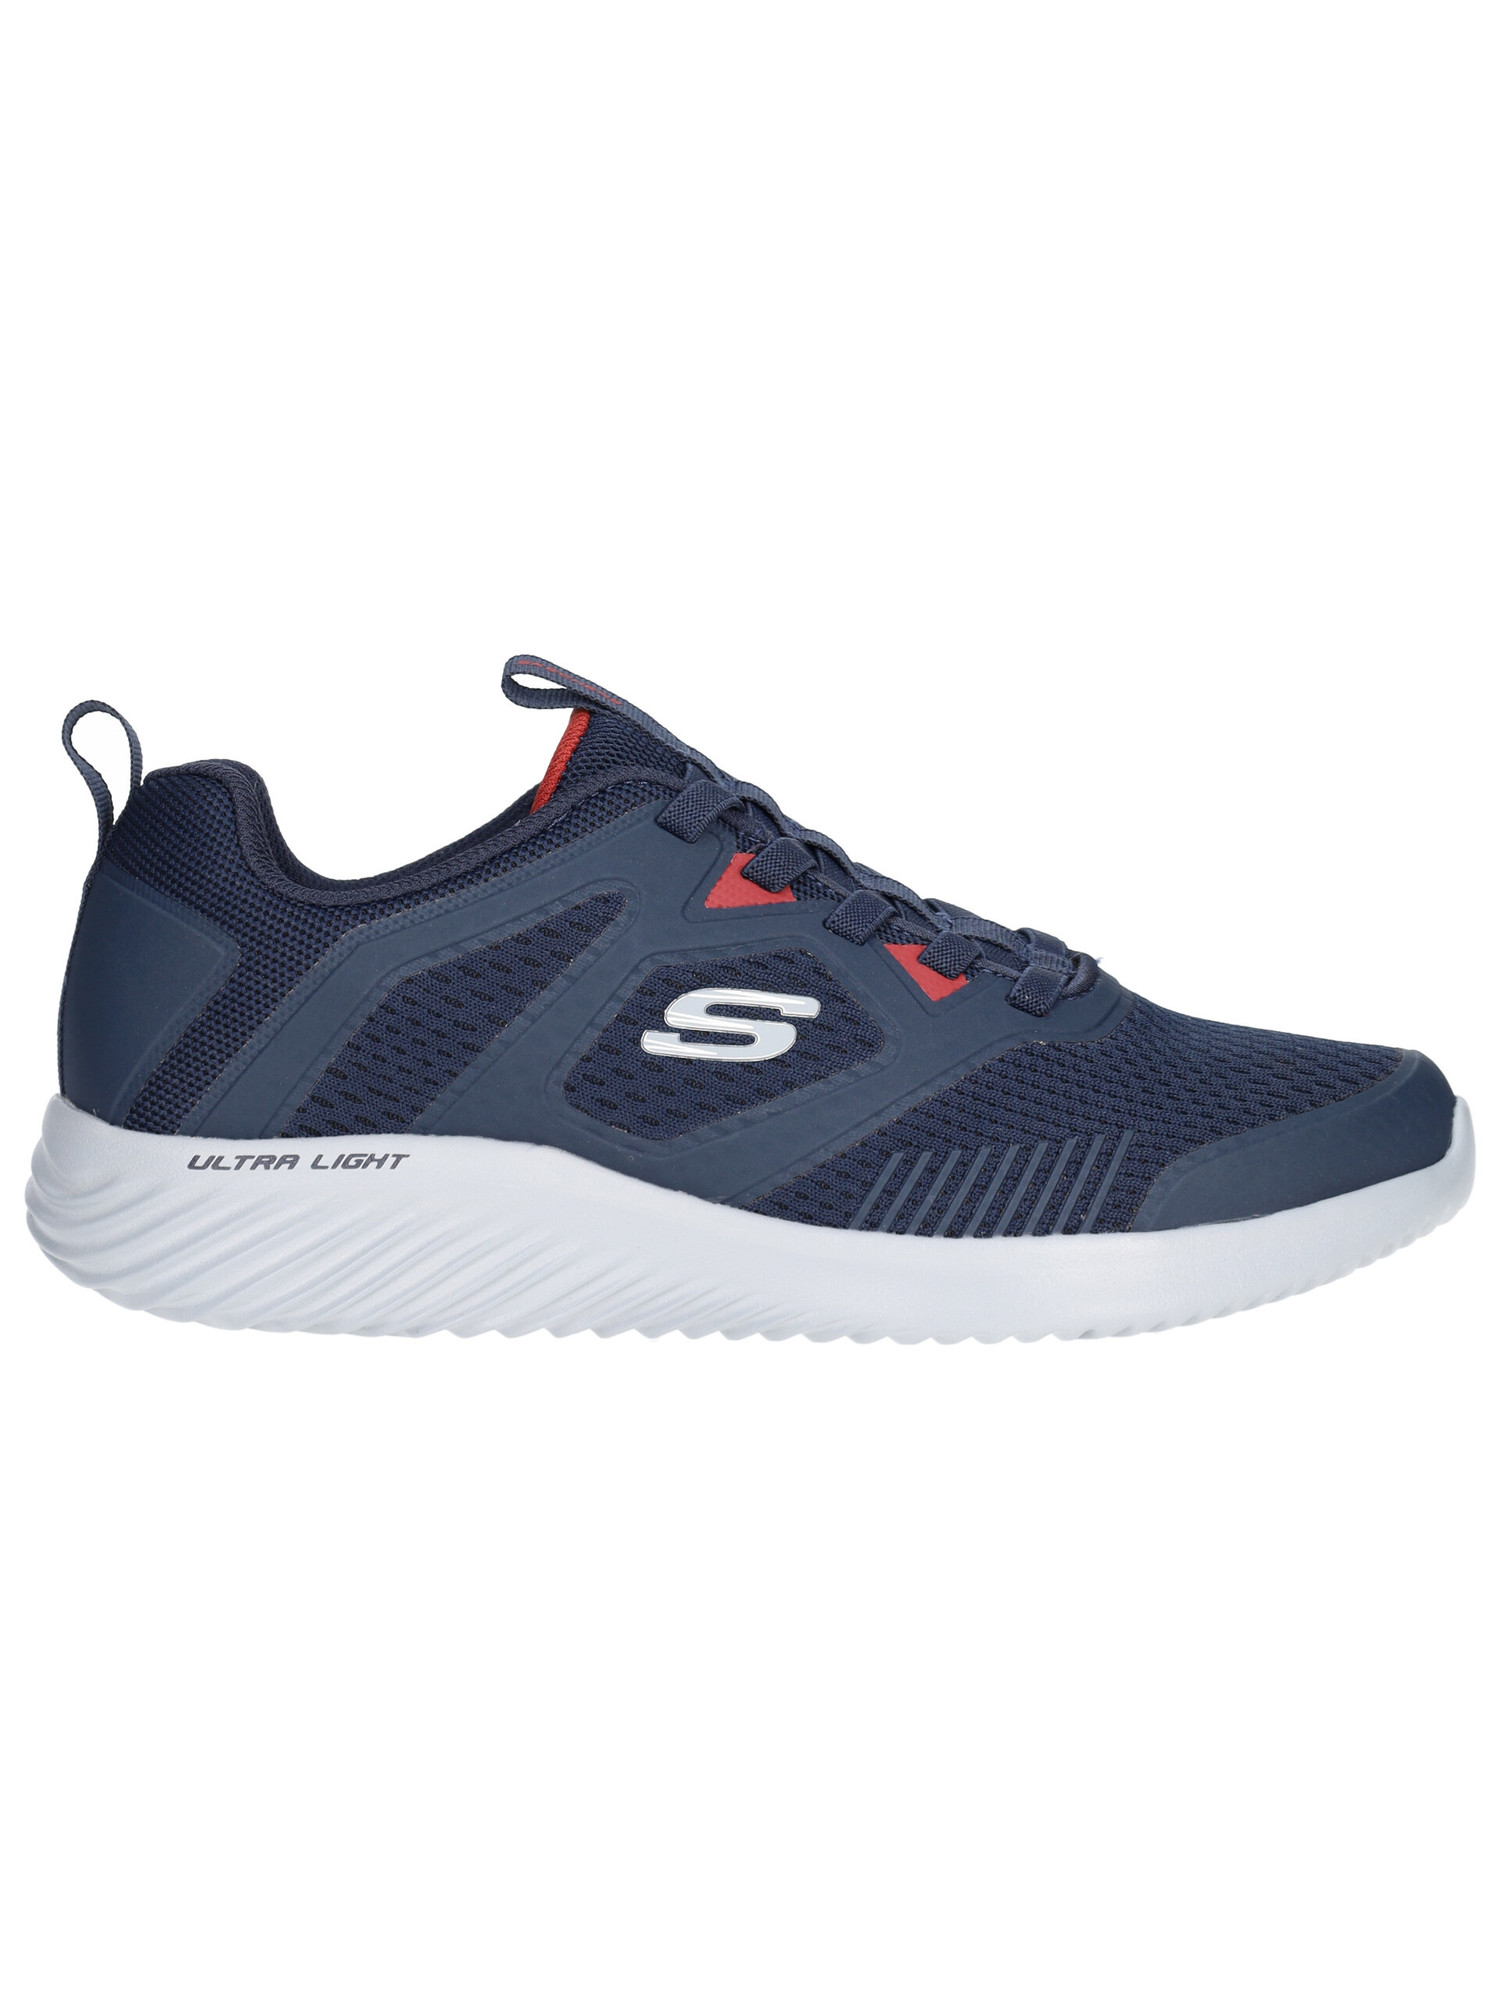 sneaker-skechers-ultra-light-da-uomo-blu